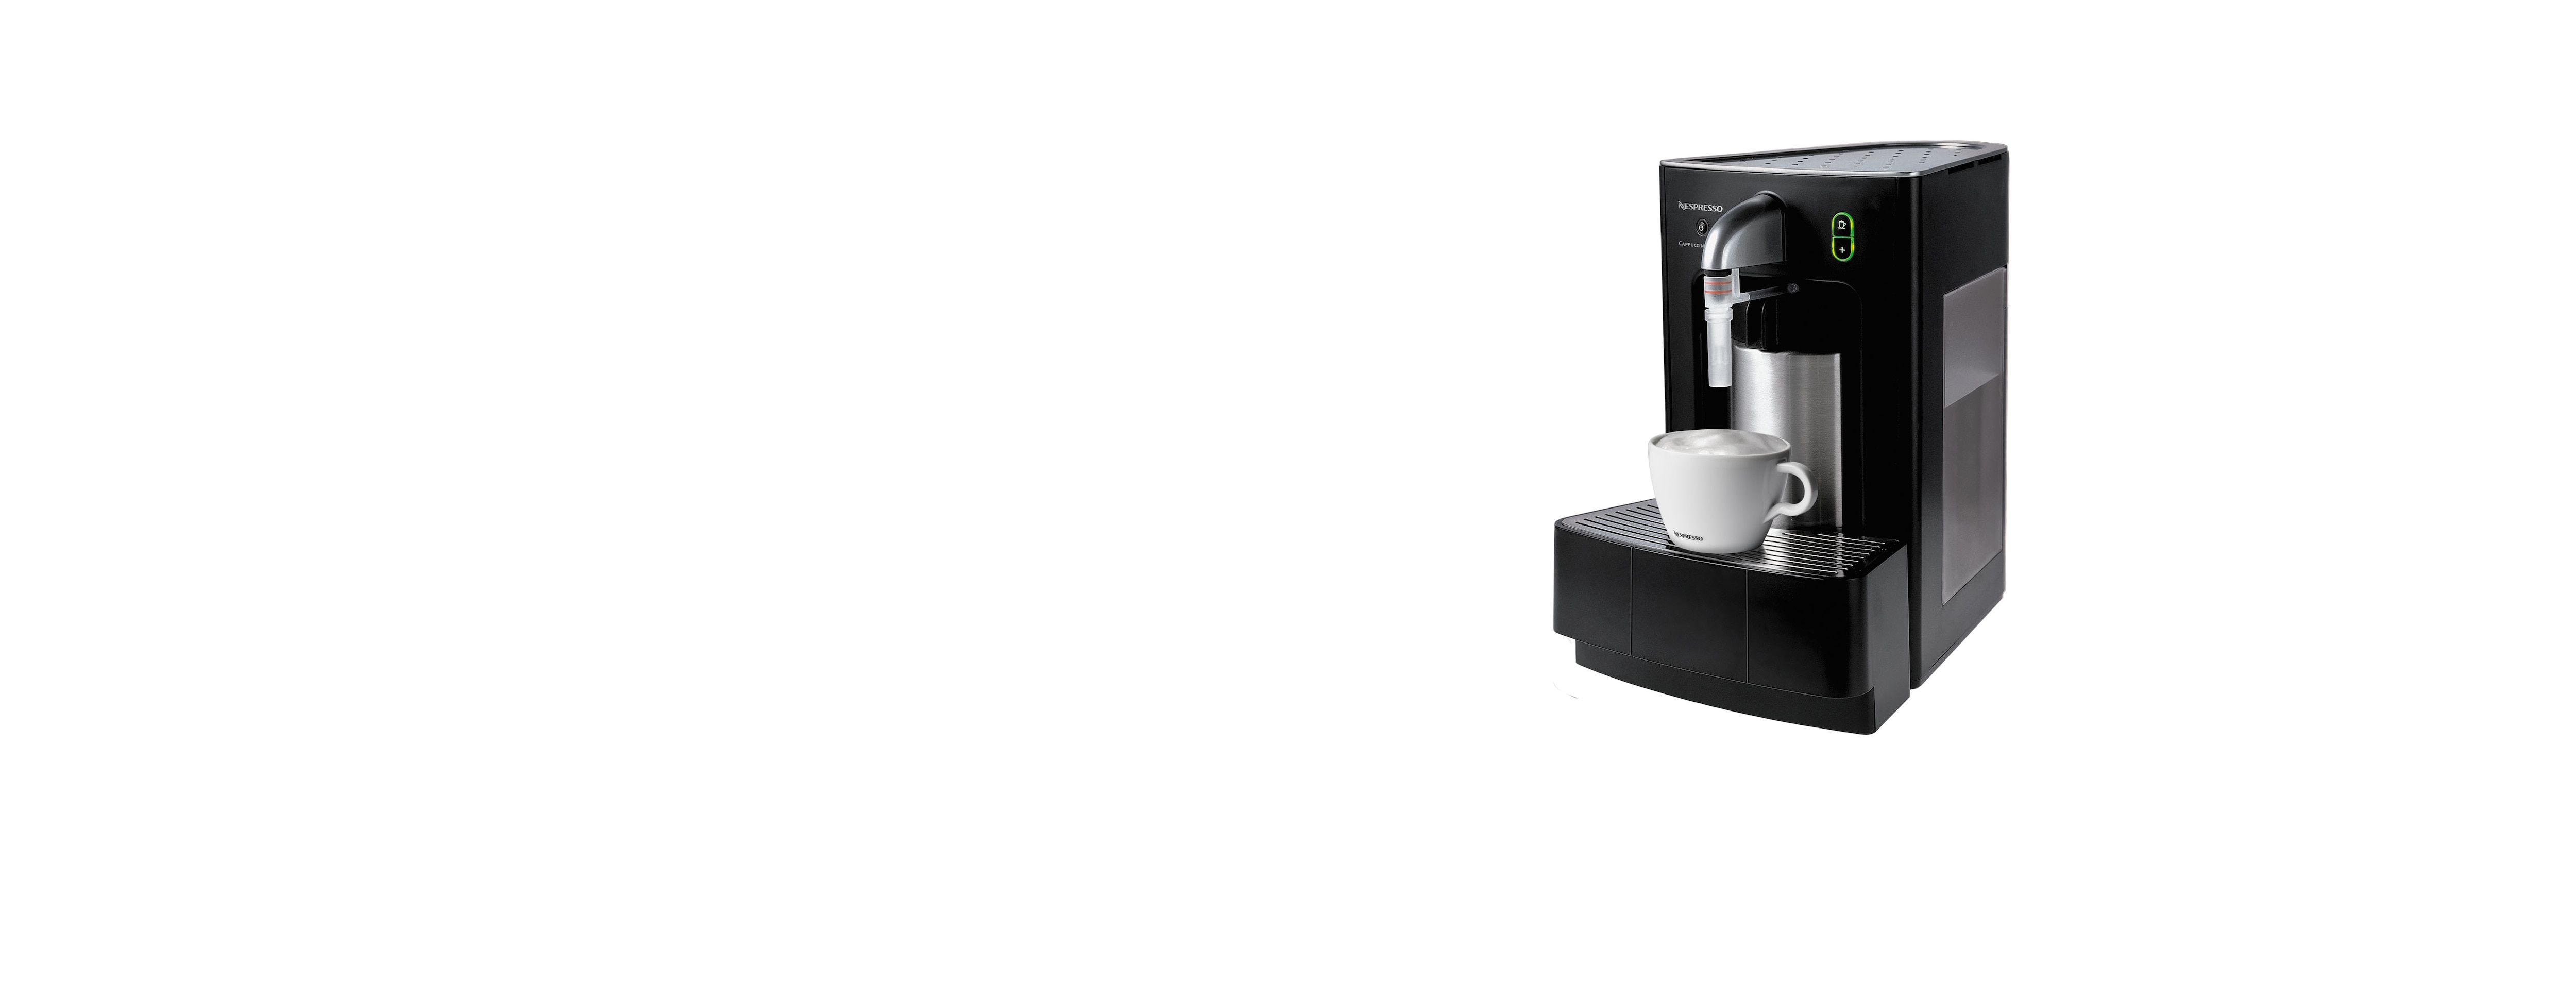 Best Milk Frother  Nespresso Coffee Machine with Milk Frother – STARESSO